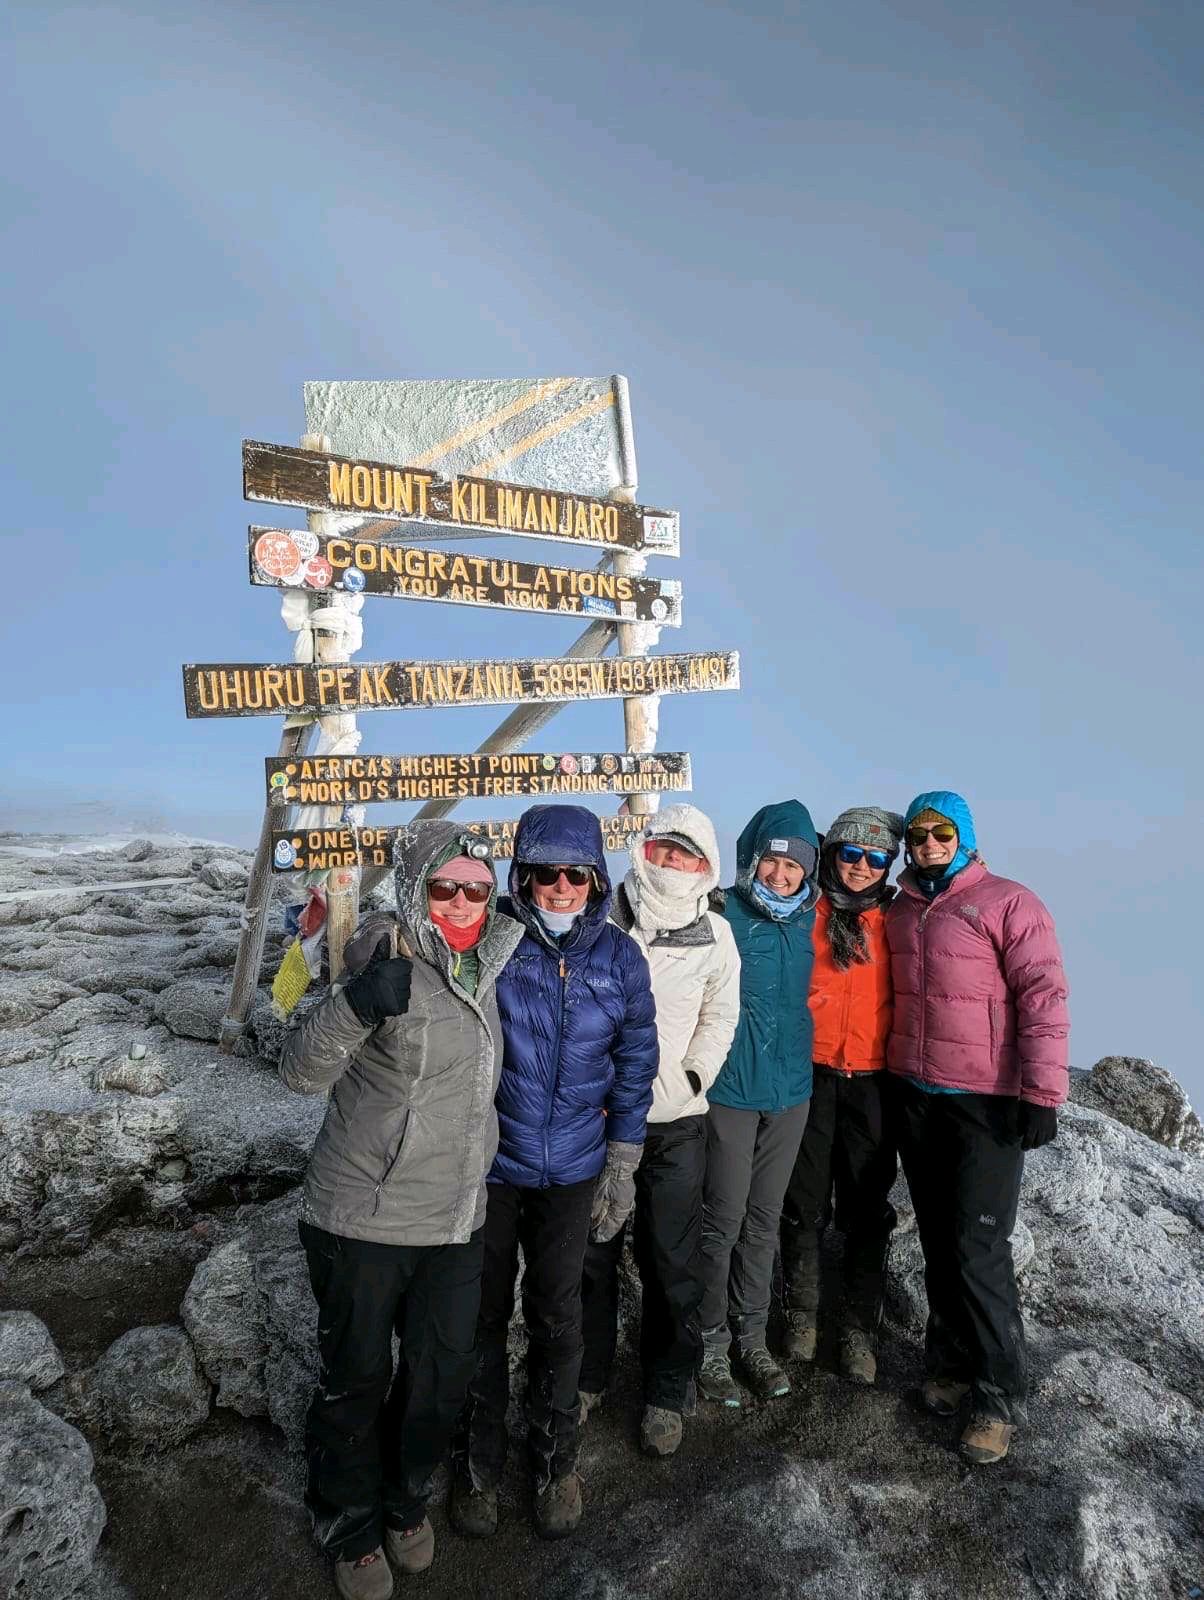 Residents summit Mt. Kilimanjaro